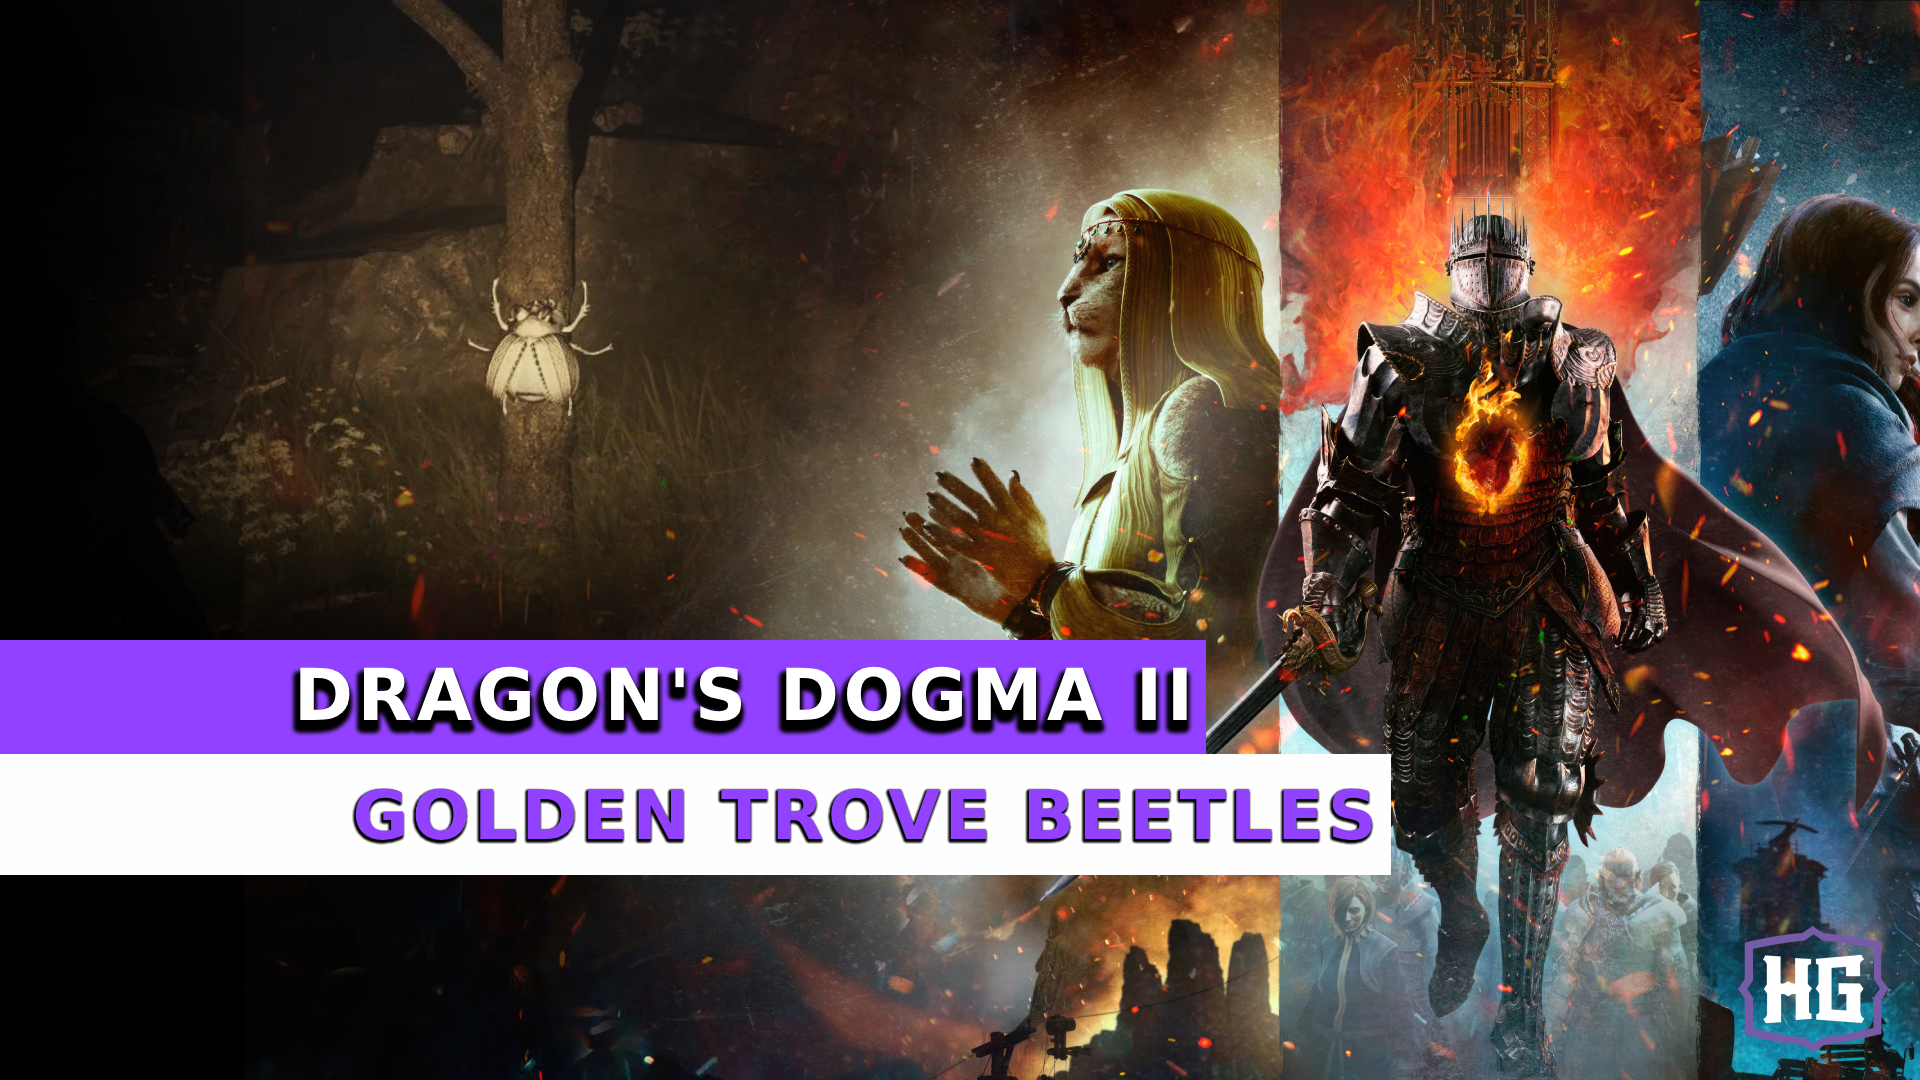 golden trove beetles dragon's dogma 2 (1)